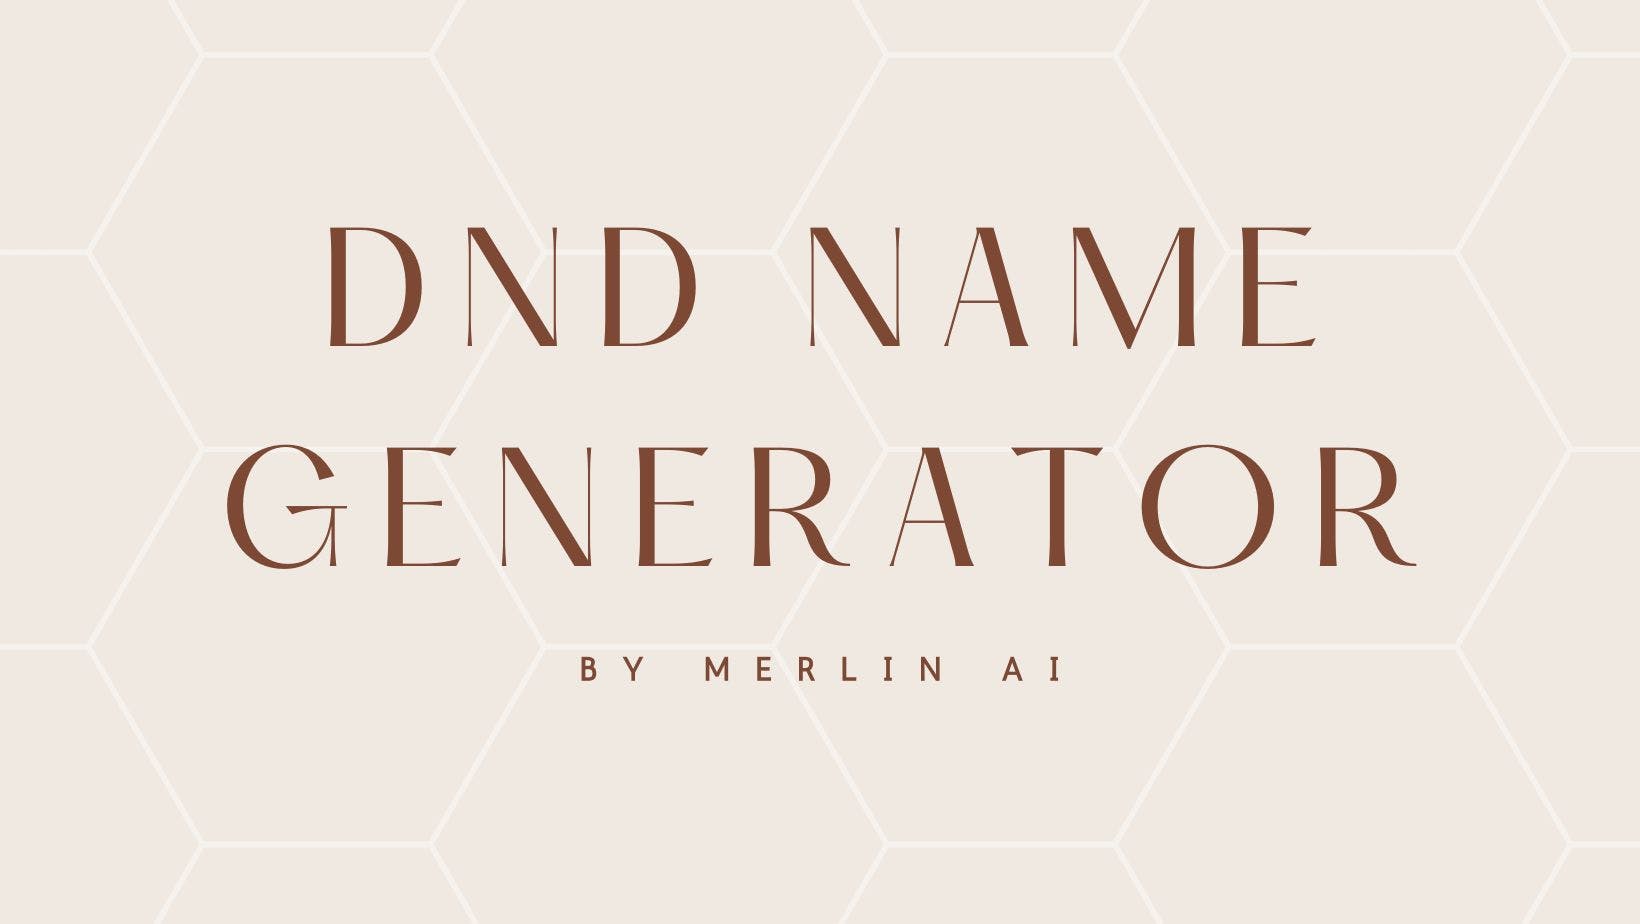 Cover Image for Merlin AI 提供的免费 DND 名称生成器